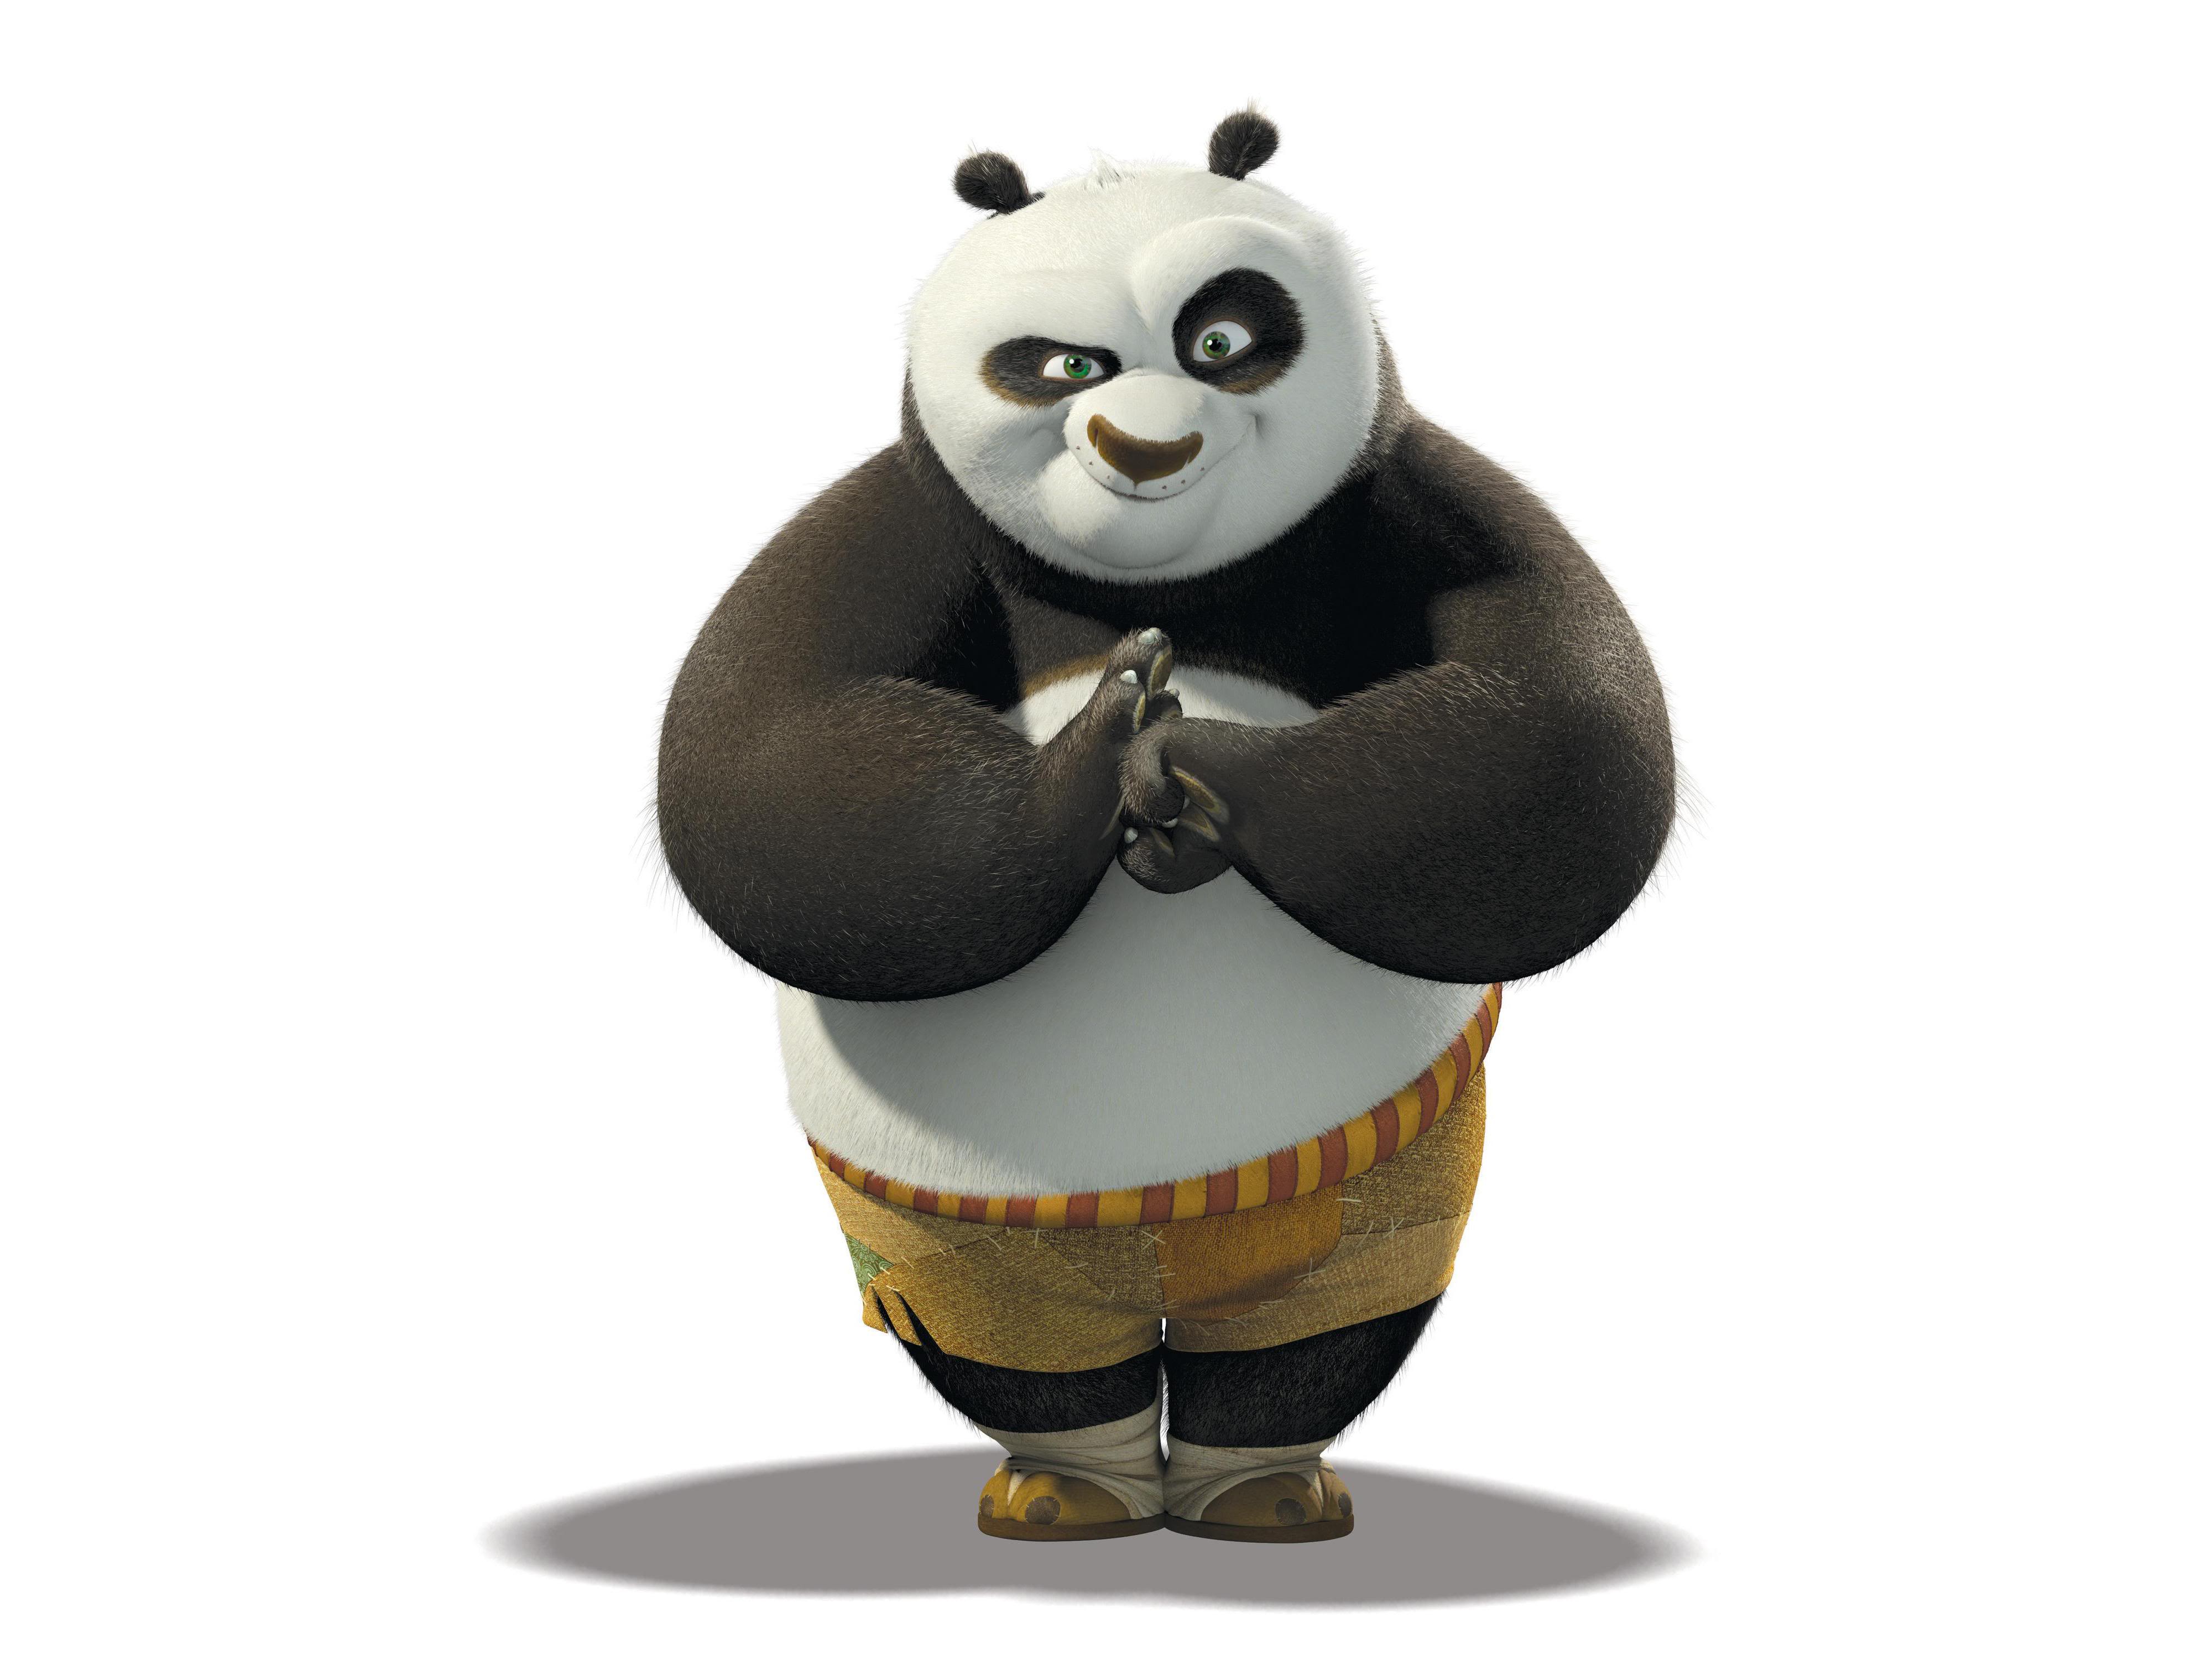 Kung Fu Panda Wallpaper